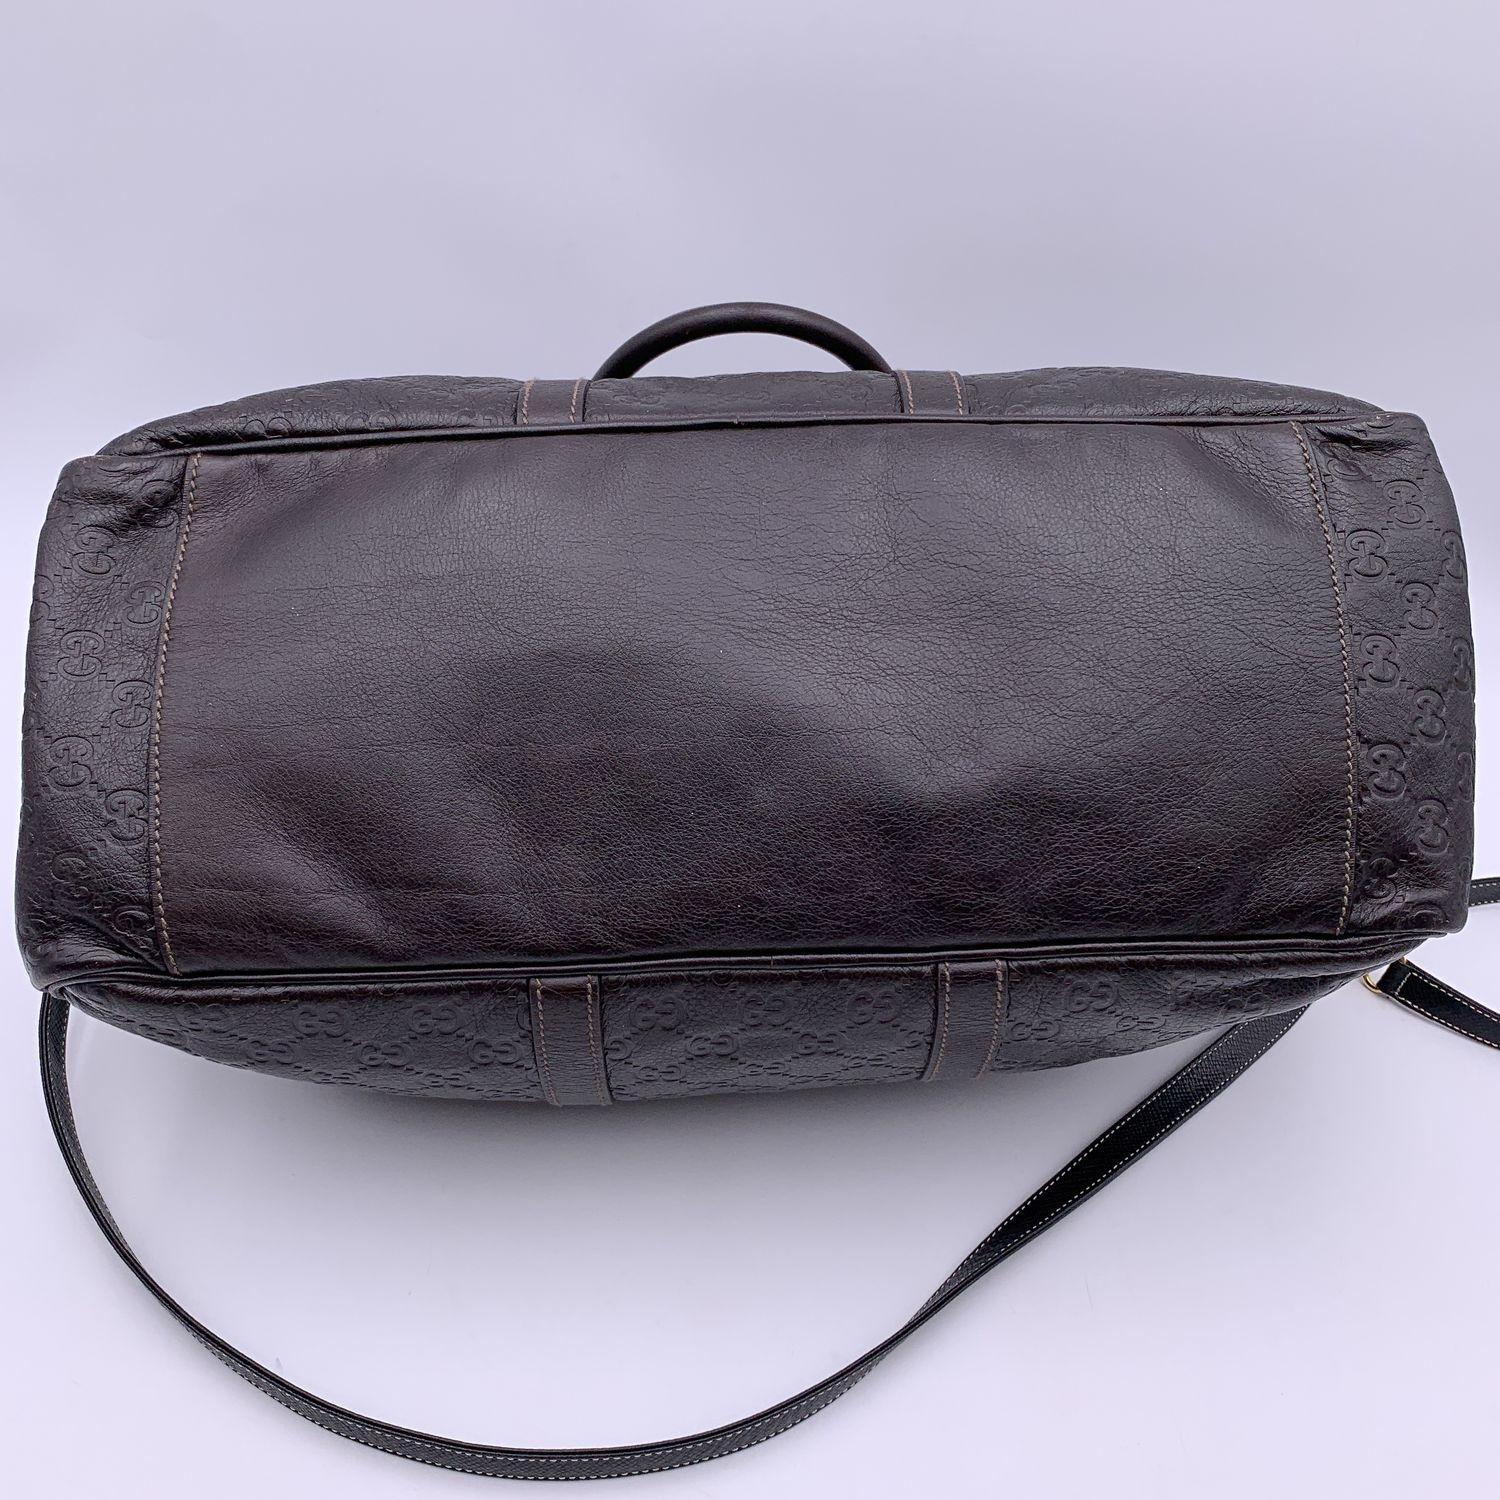 Gucci Brown Guccissima Leather Boston Bag Duffle with Strap 4